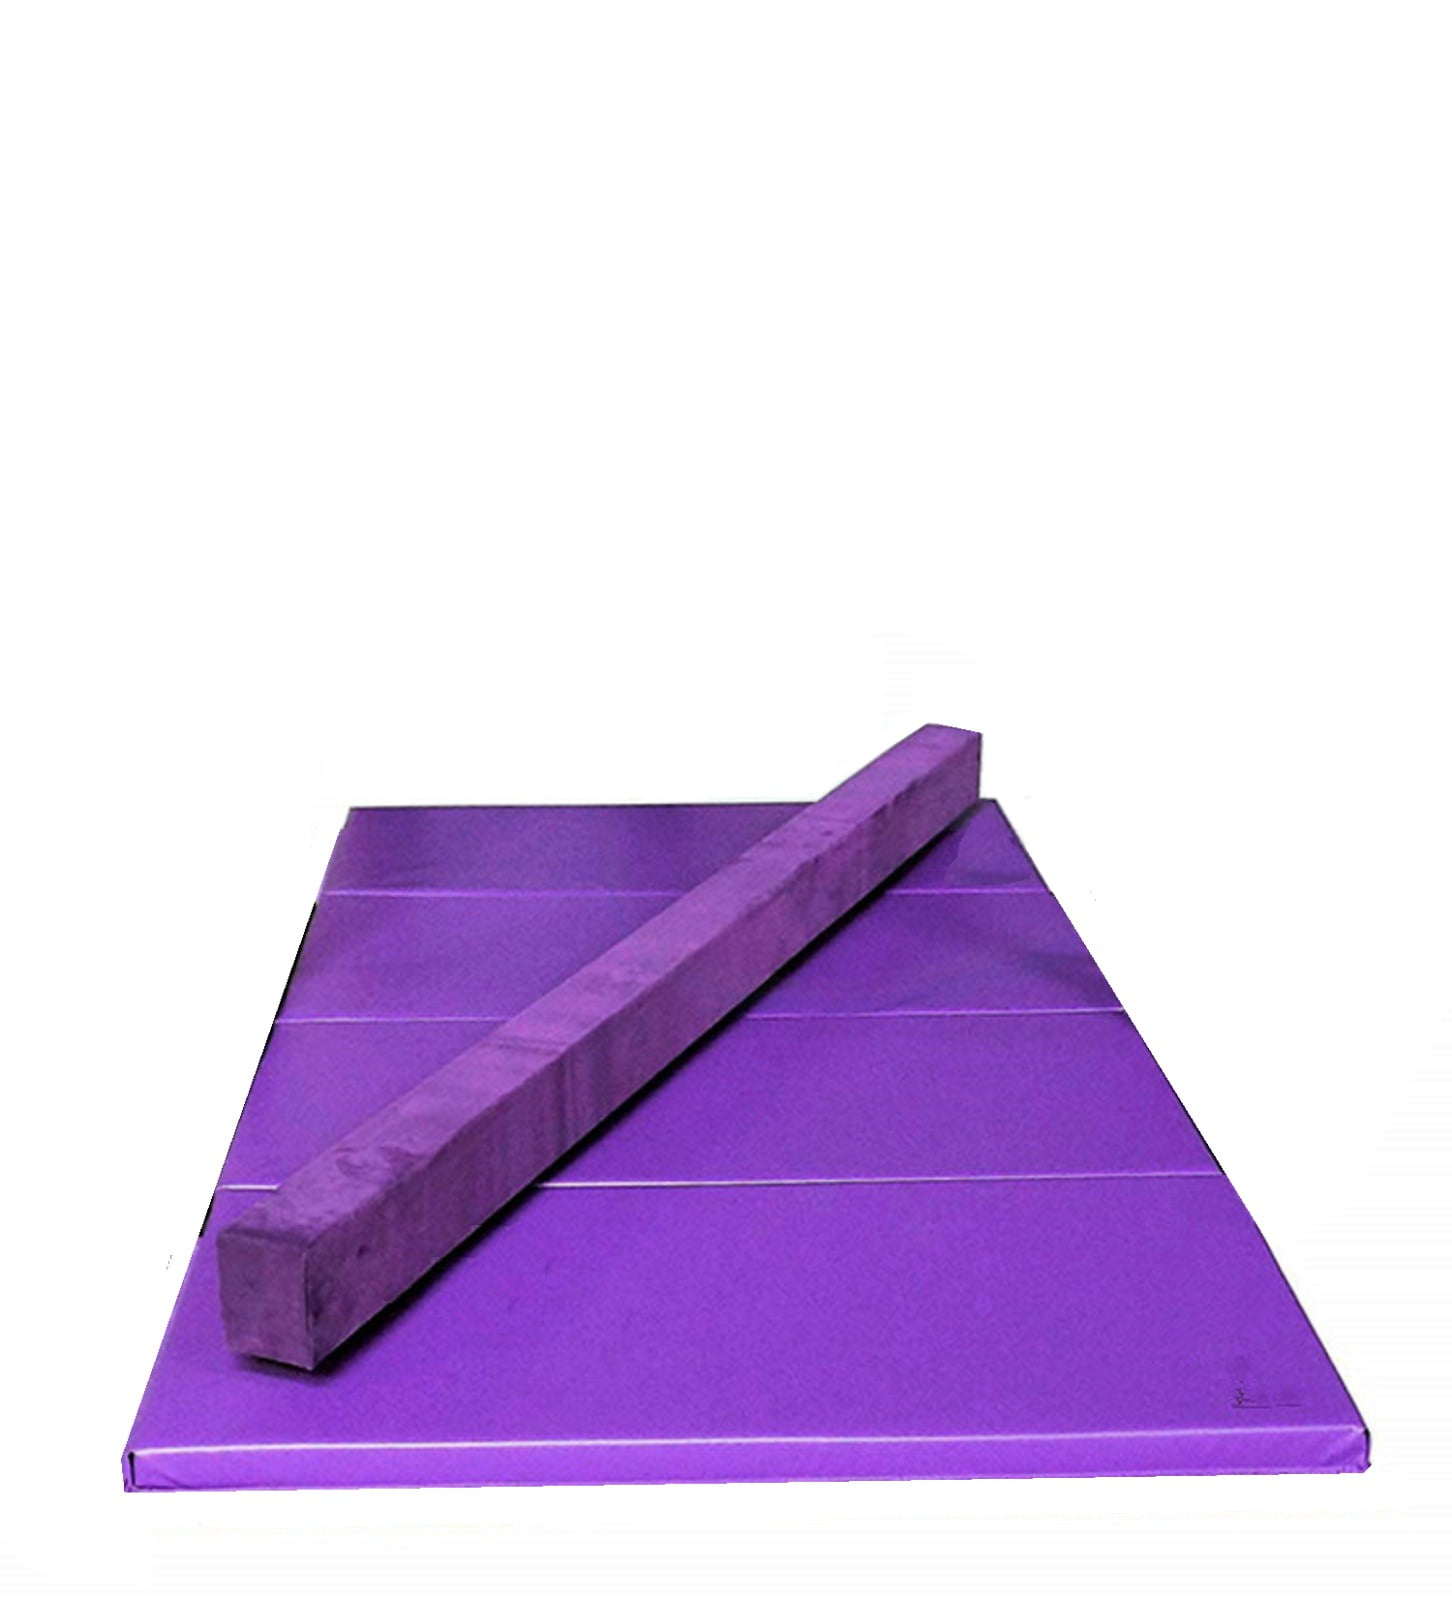 finest quality gymnastics gym balance beam purple 6FT long reduced look bargain 